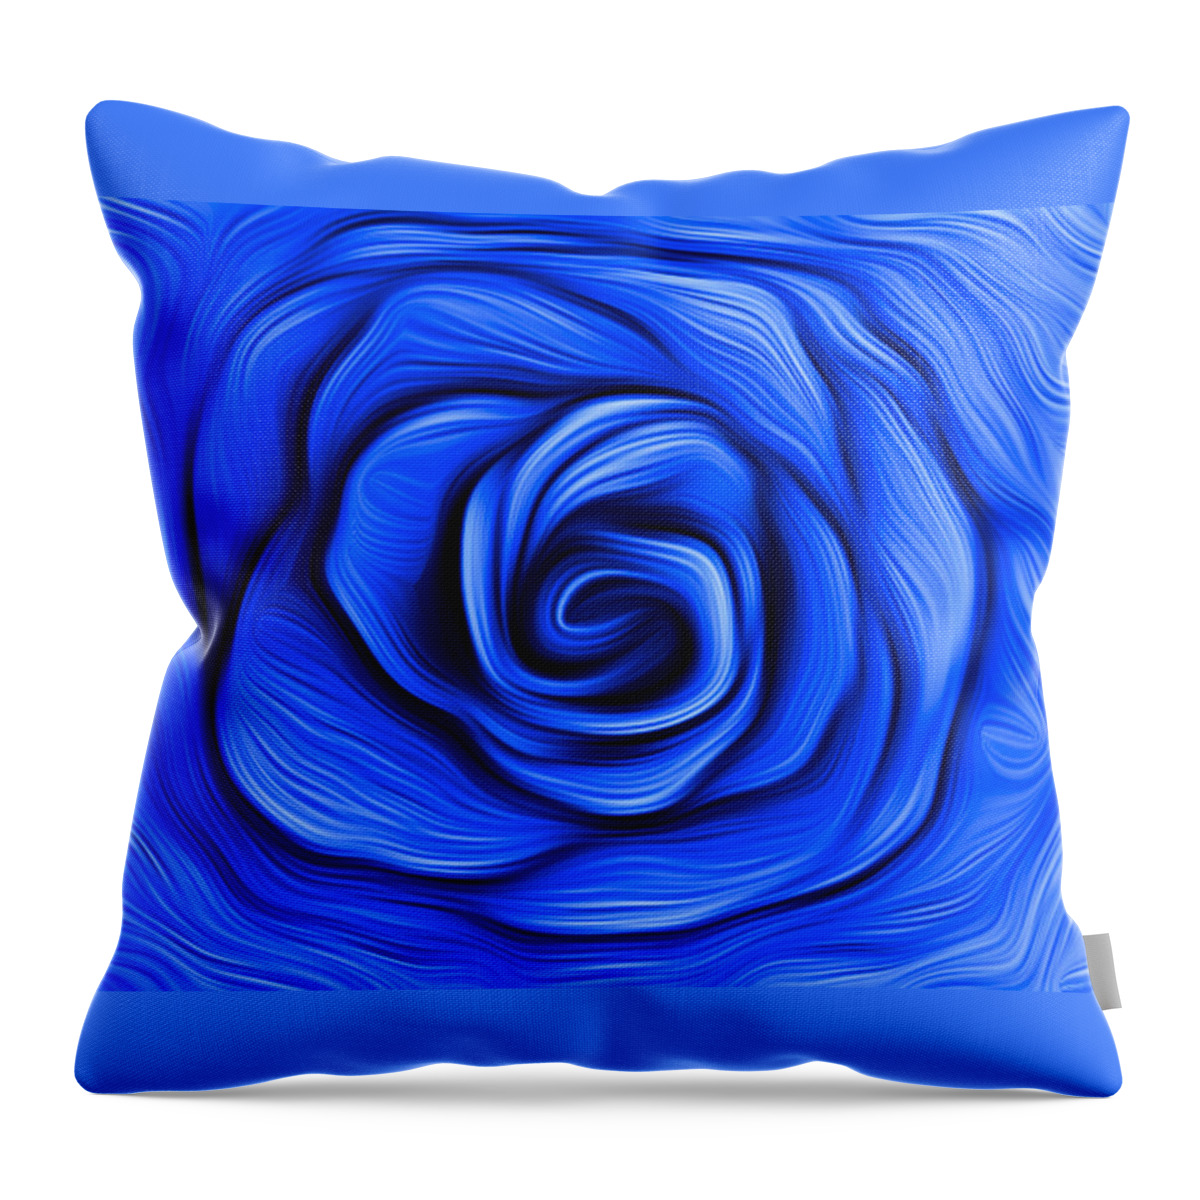 Flower Throw Pillow featuring the digital art Blue Rose by Ronald Mills